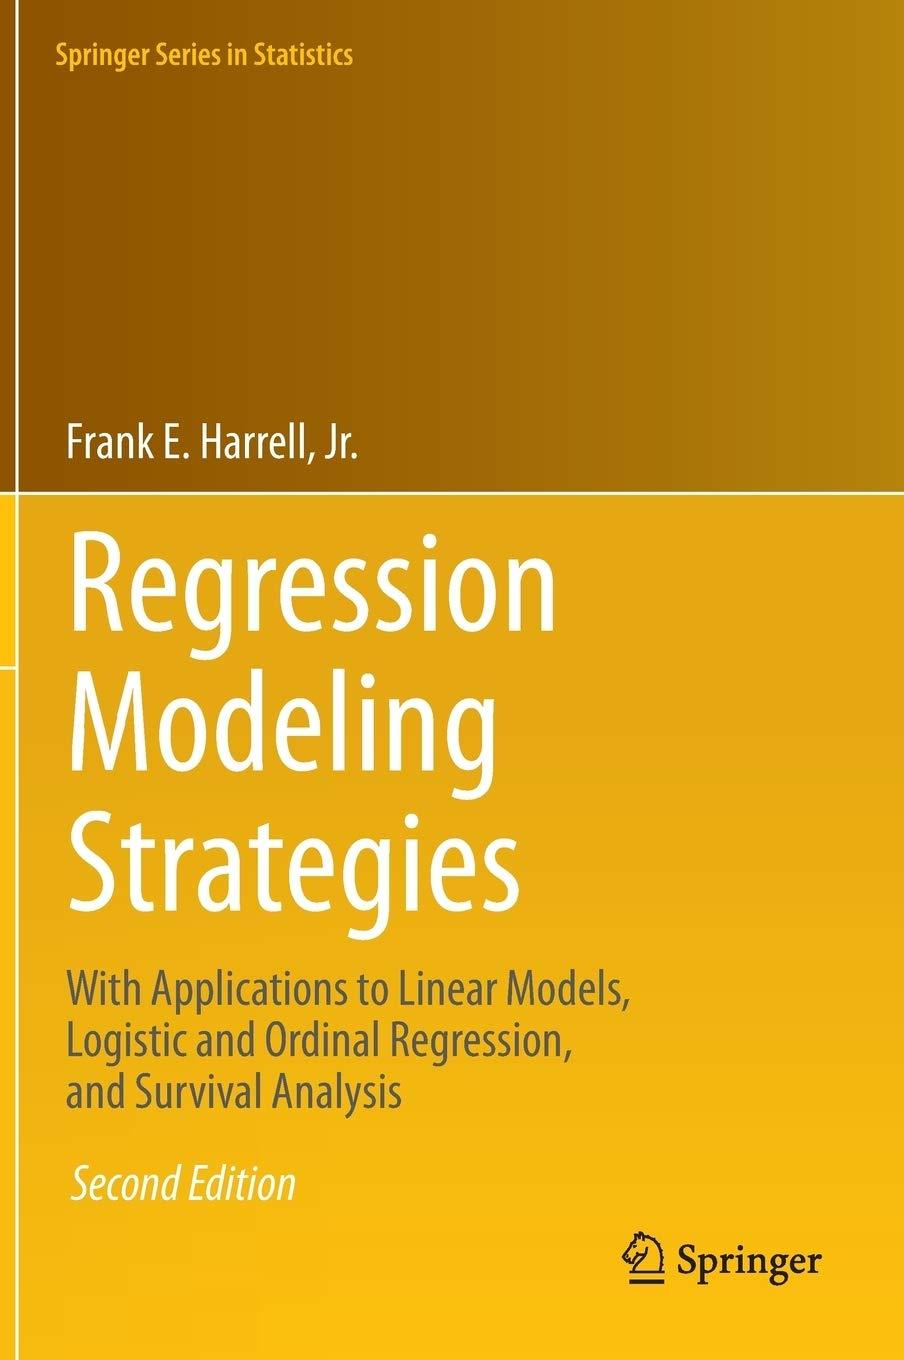 regression modeling strategies 2nd edition frank e. harrell jr. 3319194240, 9783319194240